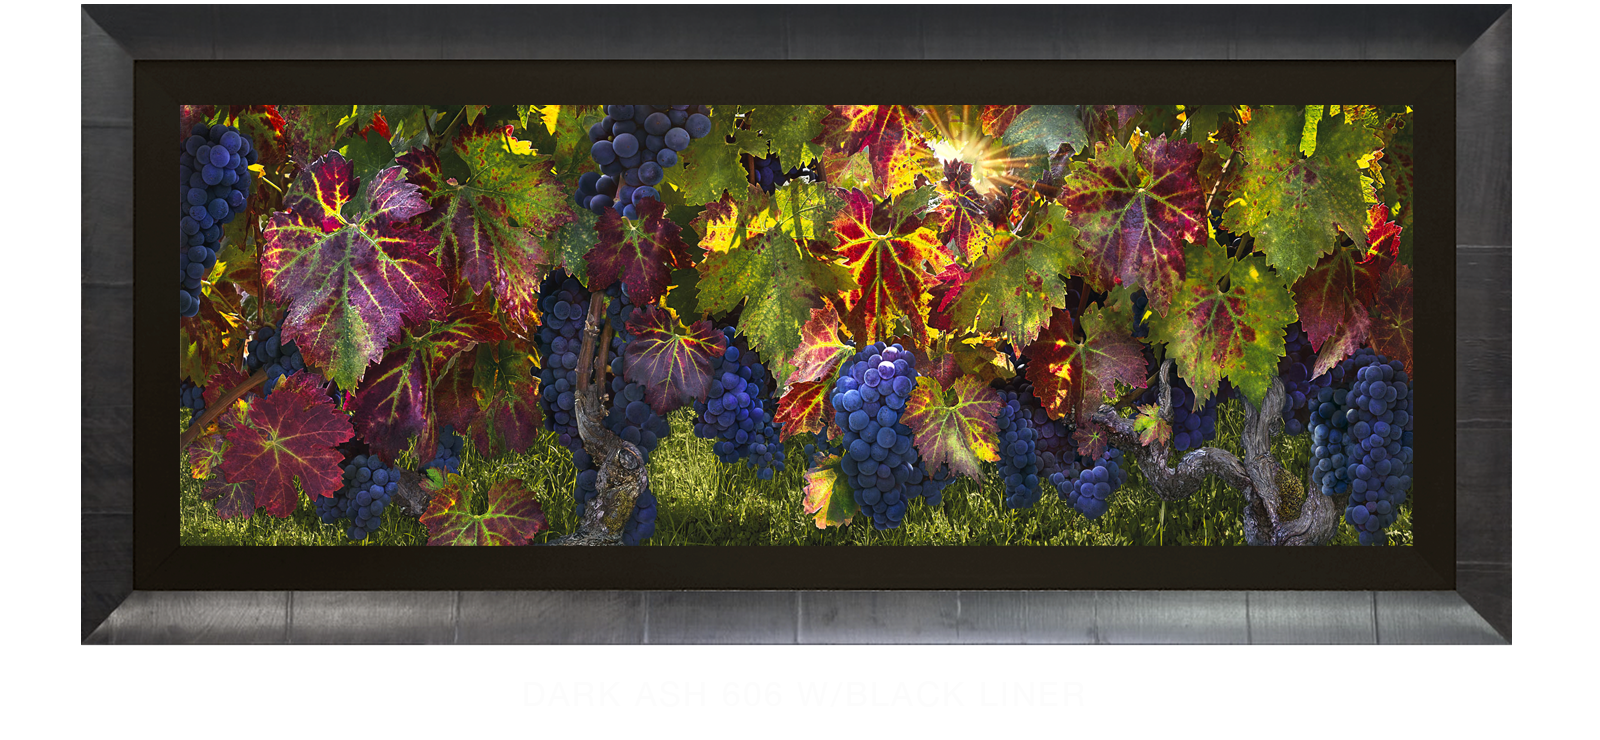 17CATHEDRALI VITIS Dark Ash 606 w_Blk Liner T